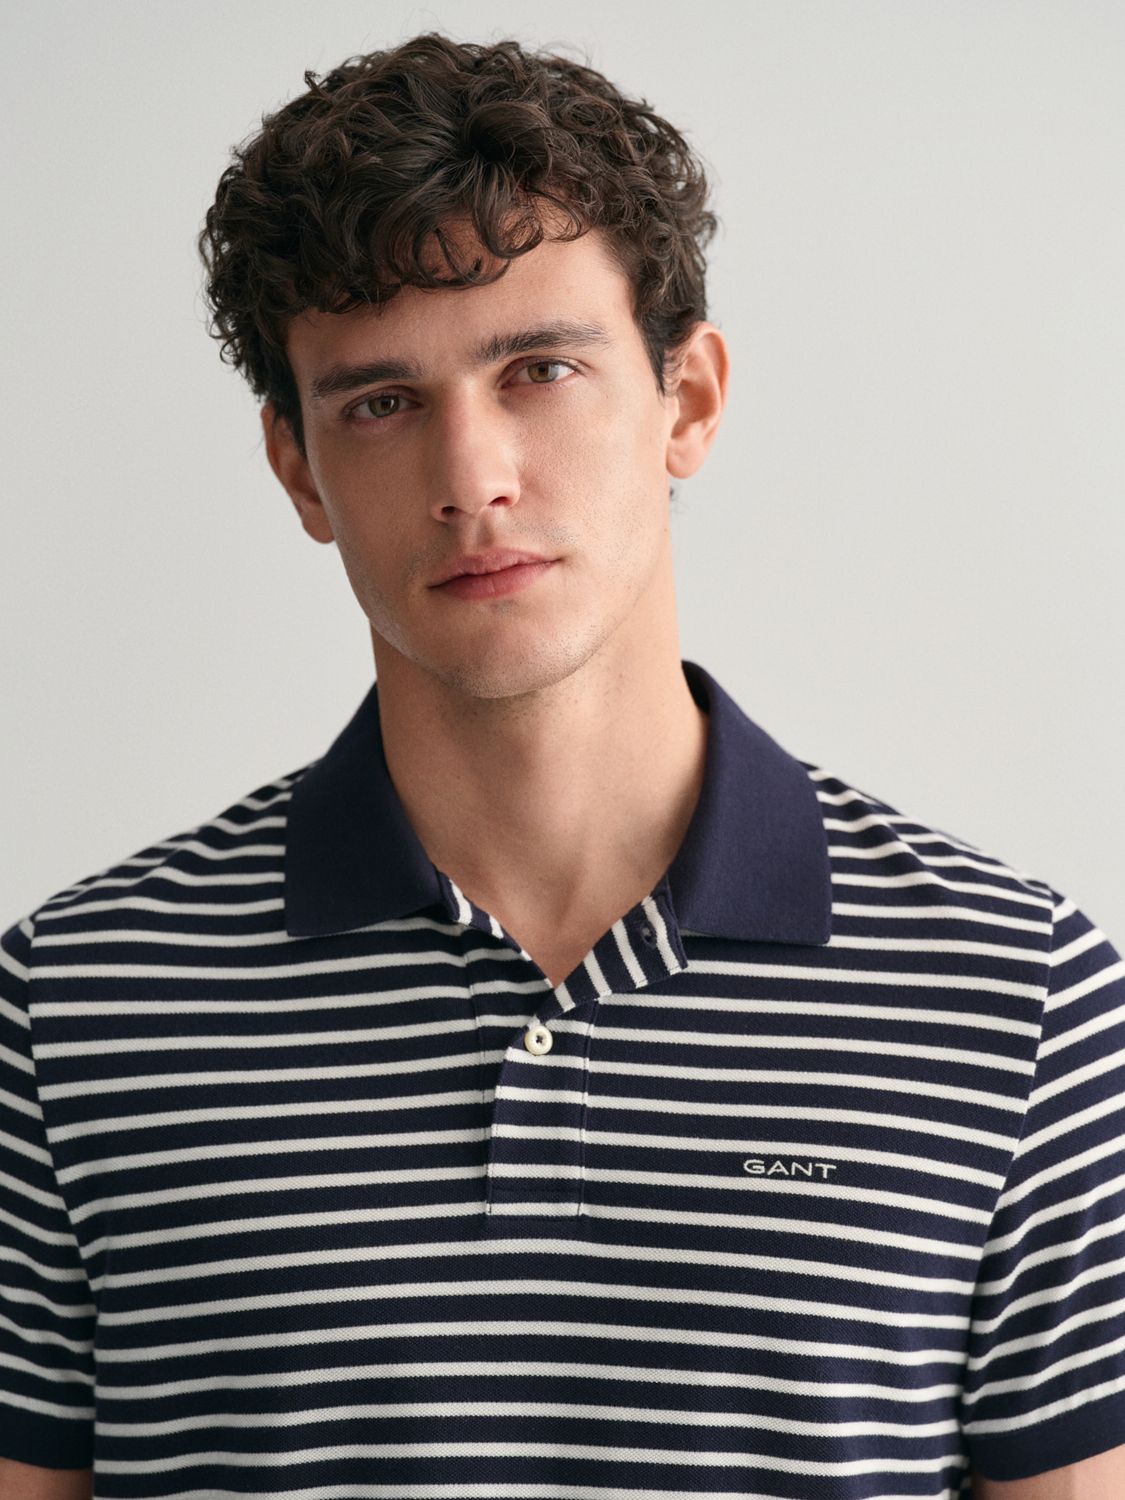 GANT Striped Short Sleeve Pique Polo Shirt, Blue/White, S